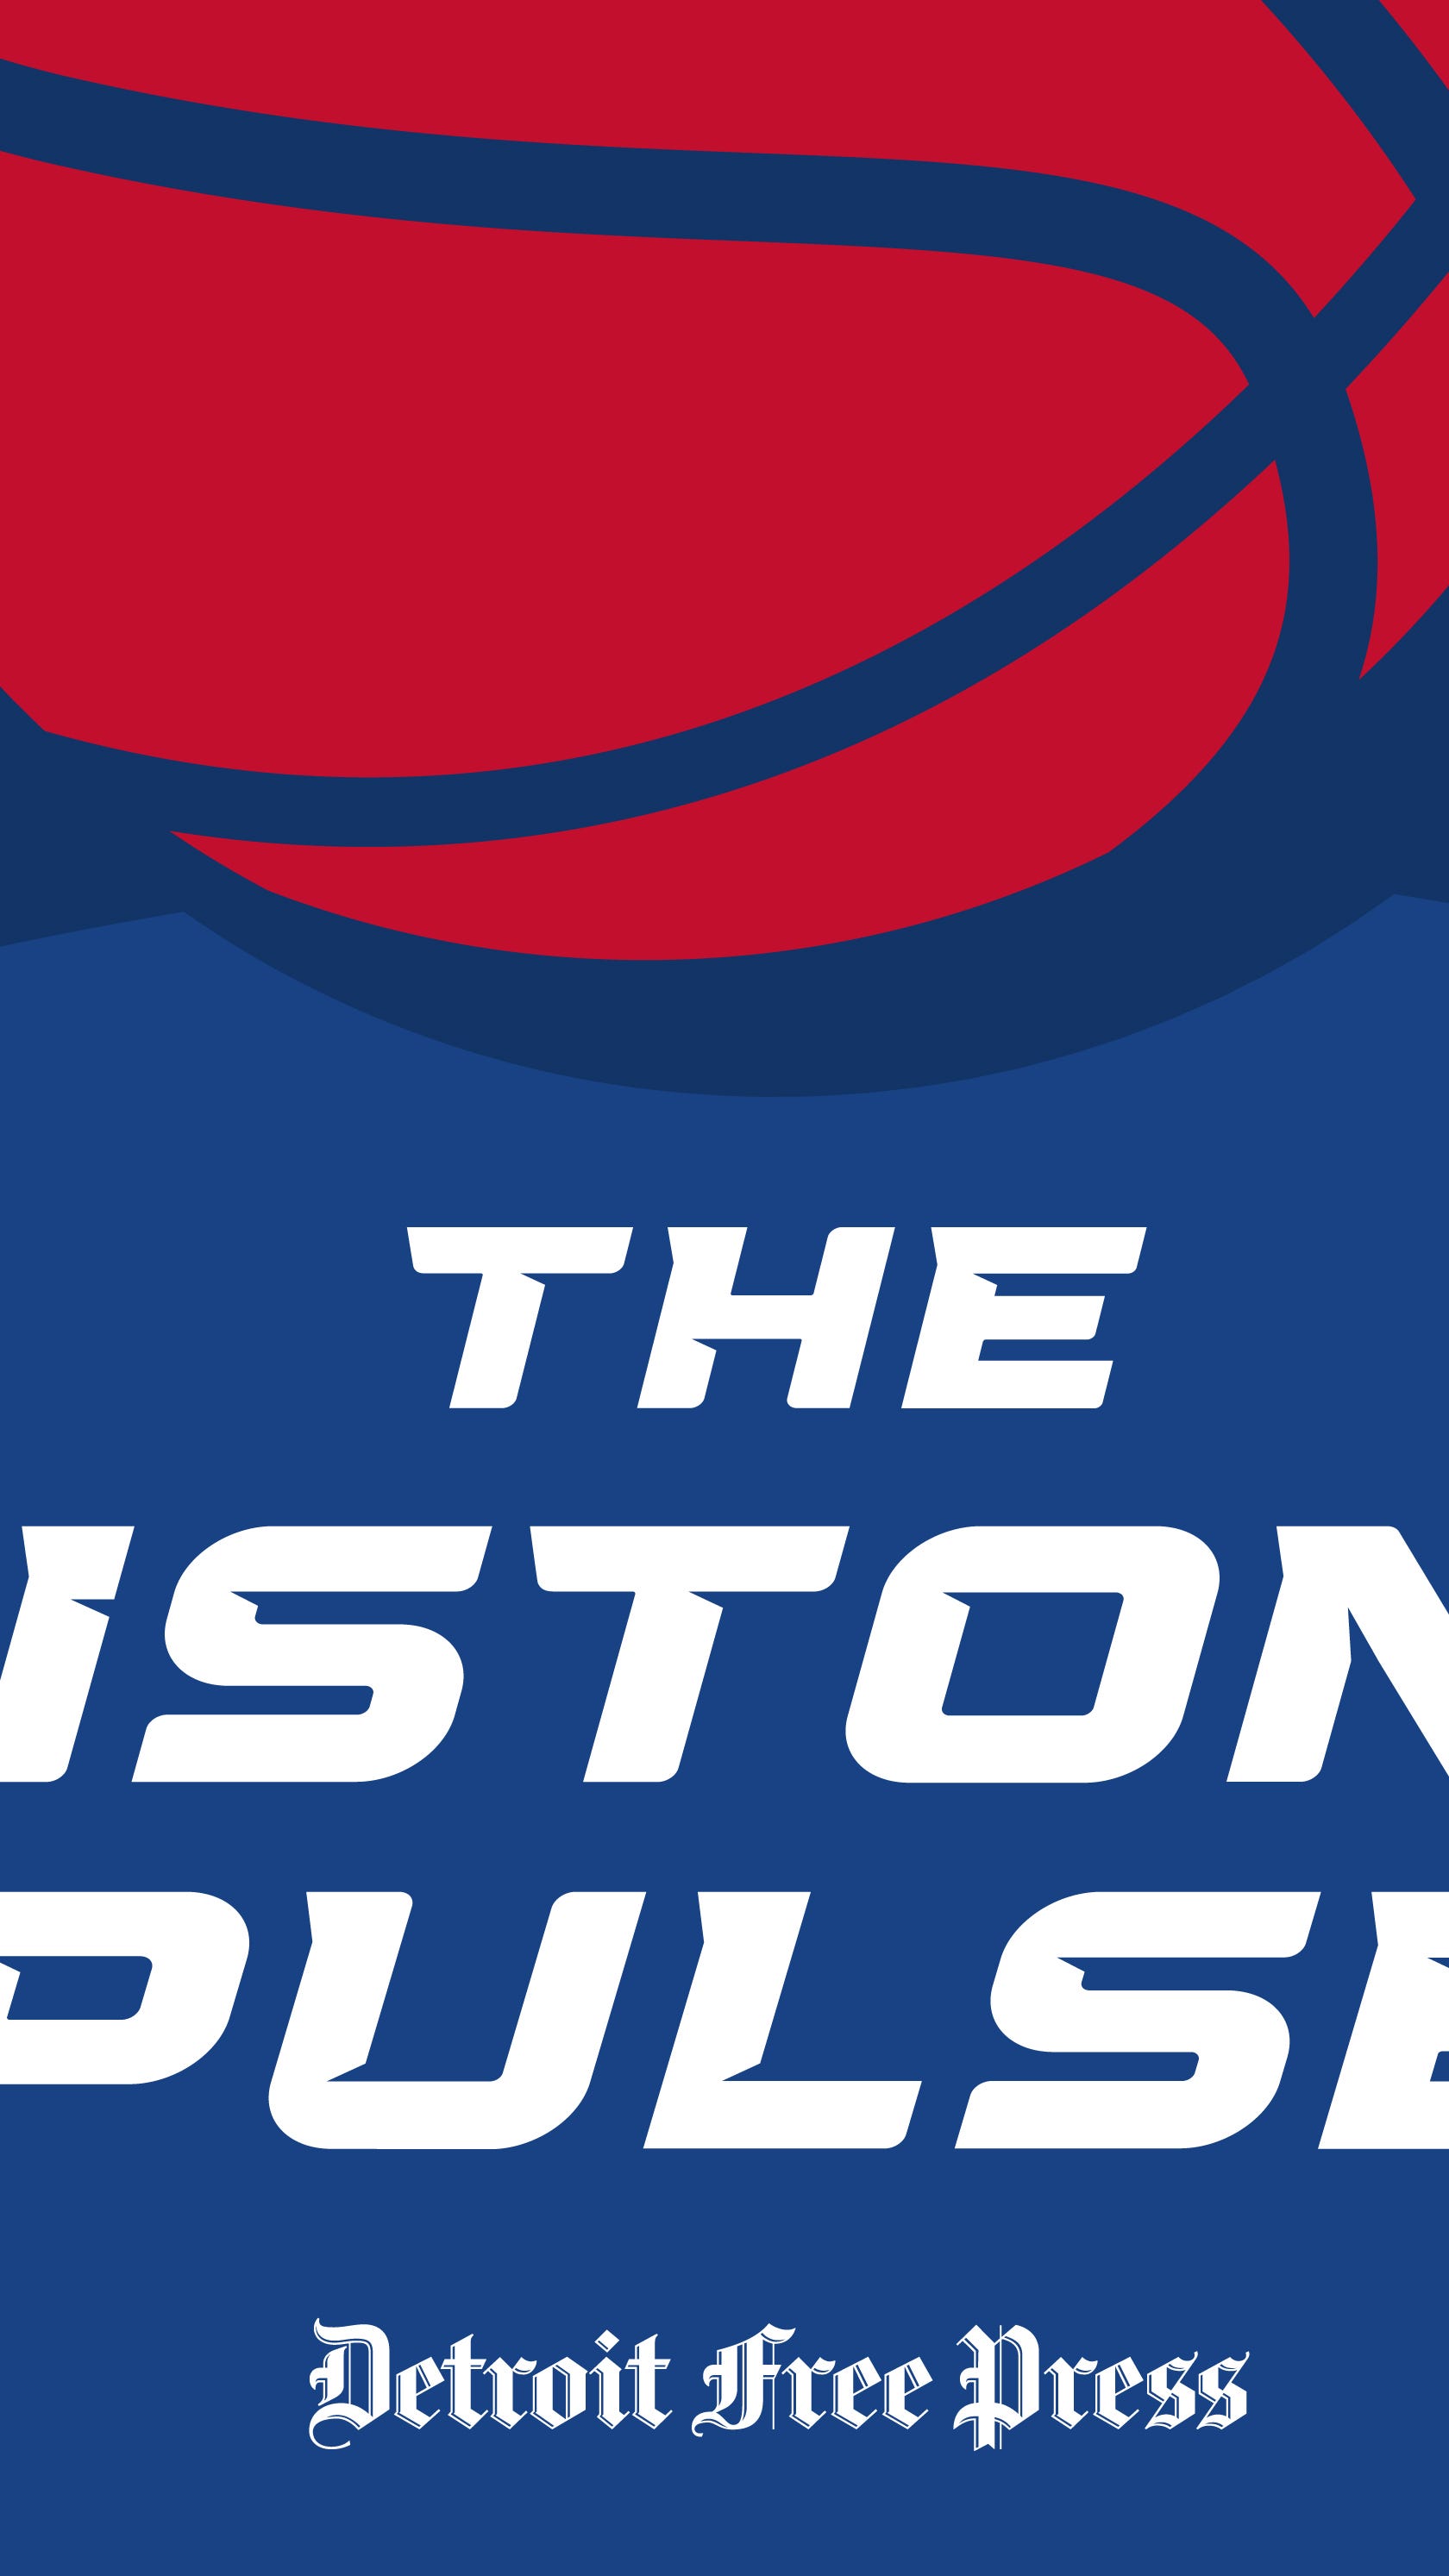 Detroit Pistons Depth Chart Updated: Starting 5 lineup explored